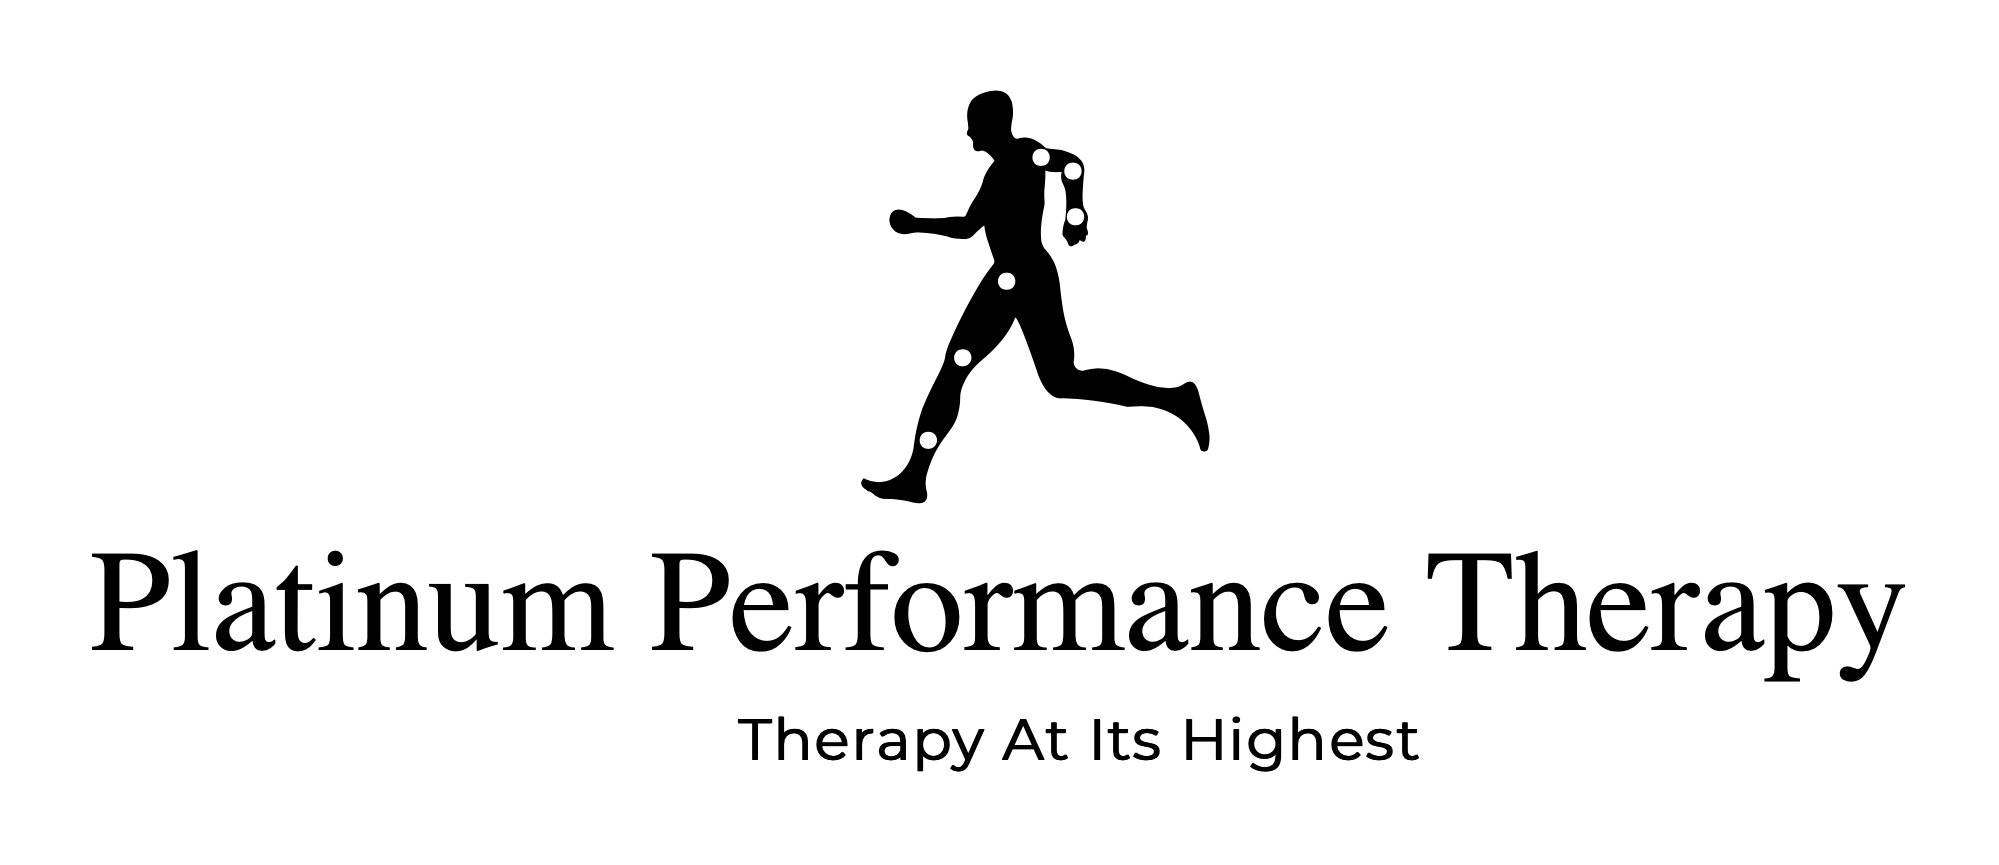 Platinum Performance Therapy